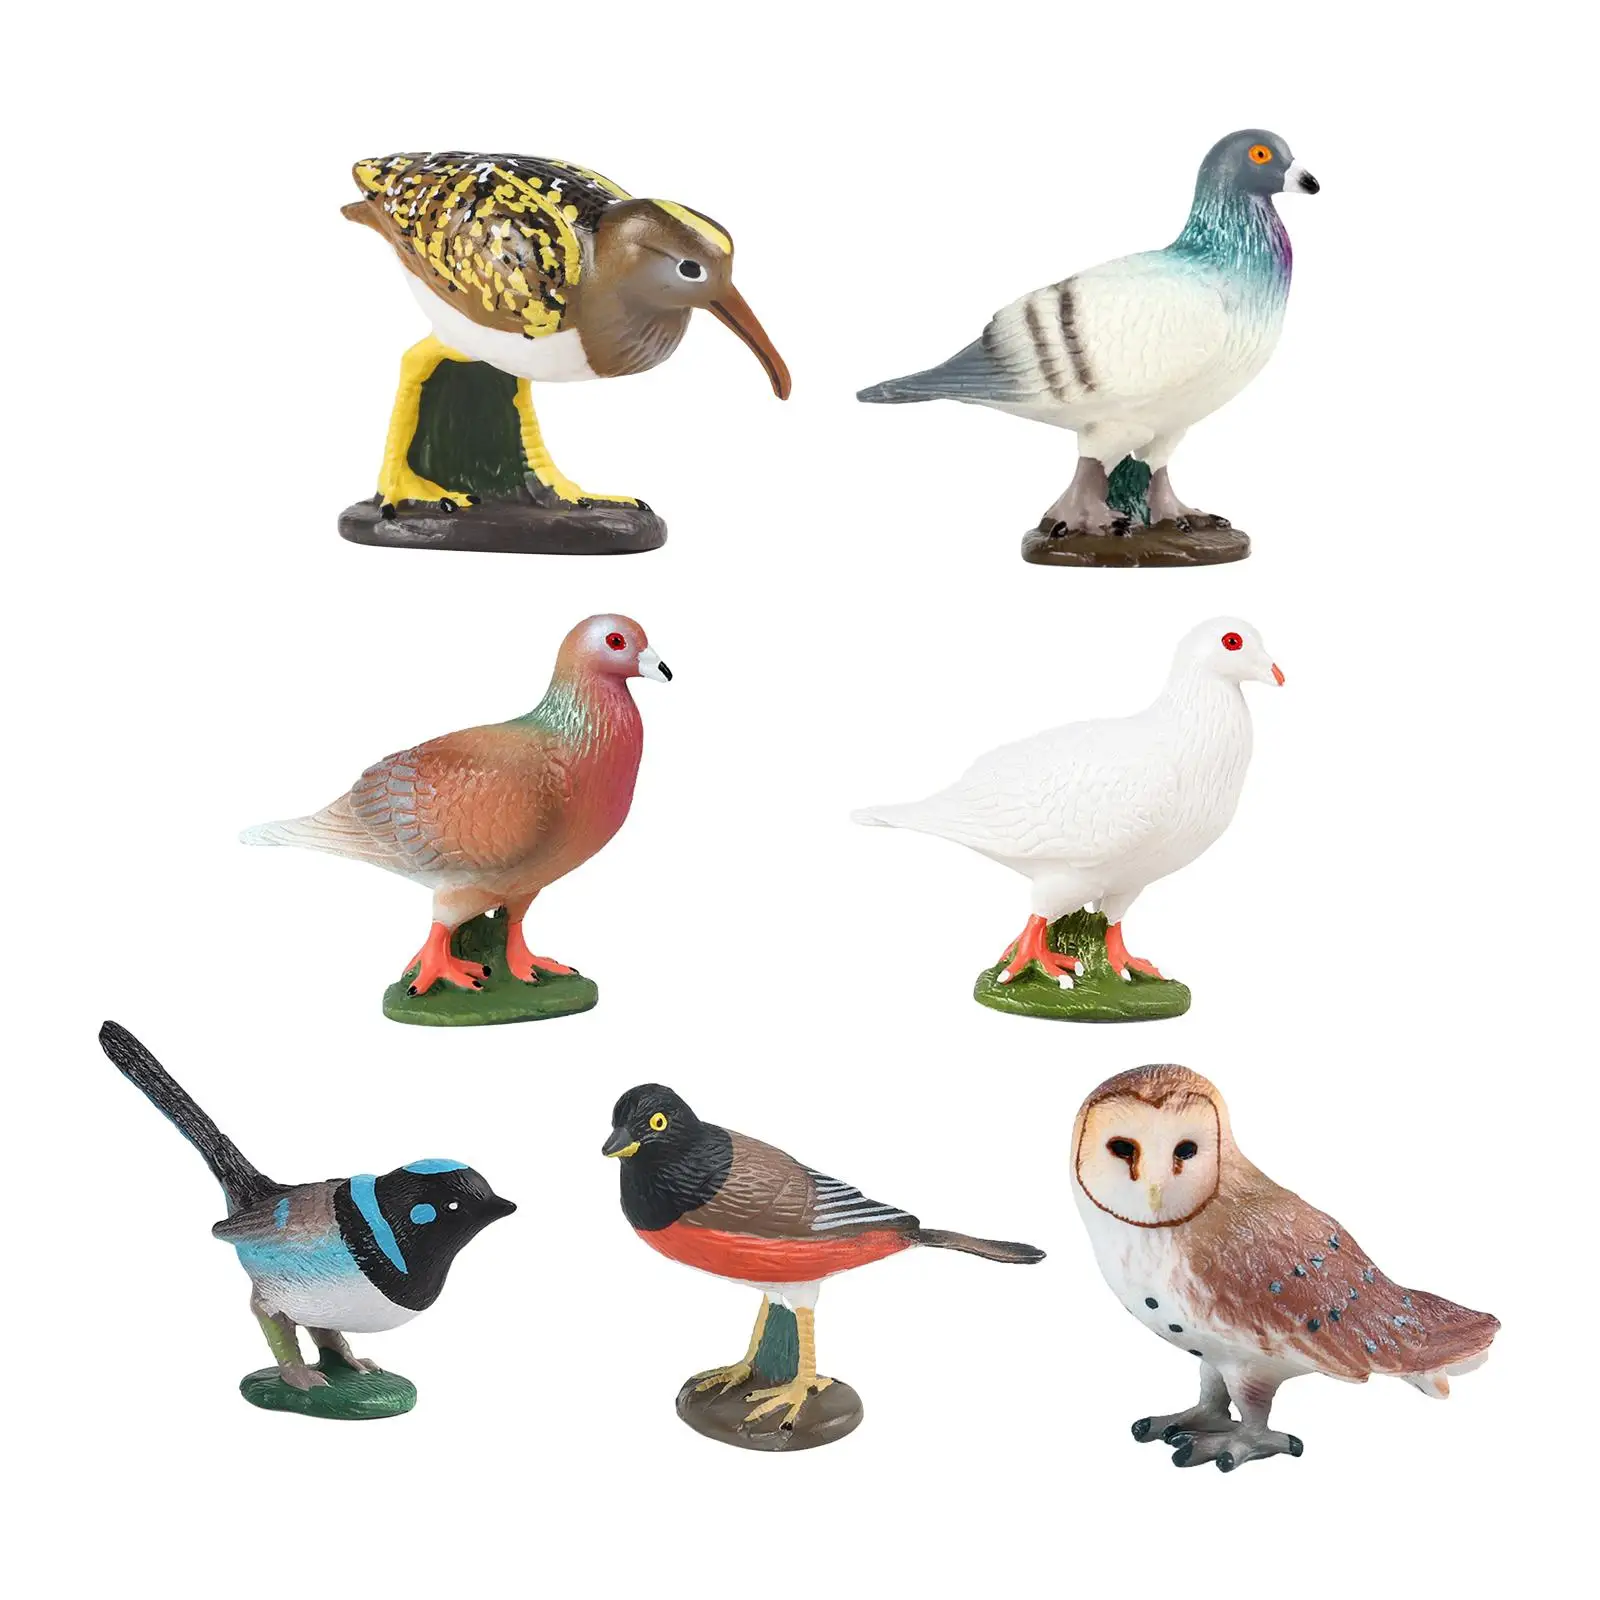 Durable bird figure, fine workmanship, cute educational toy, bird model, bird